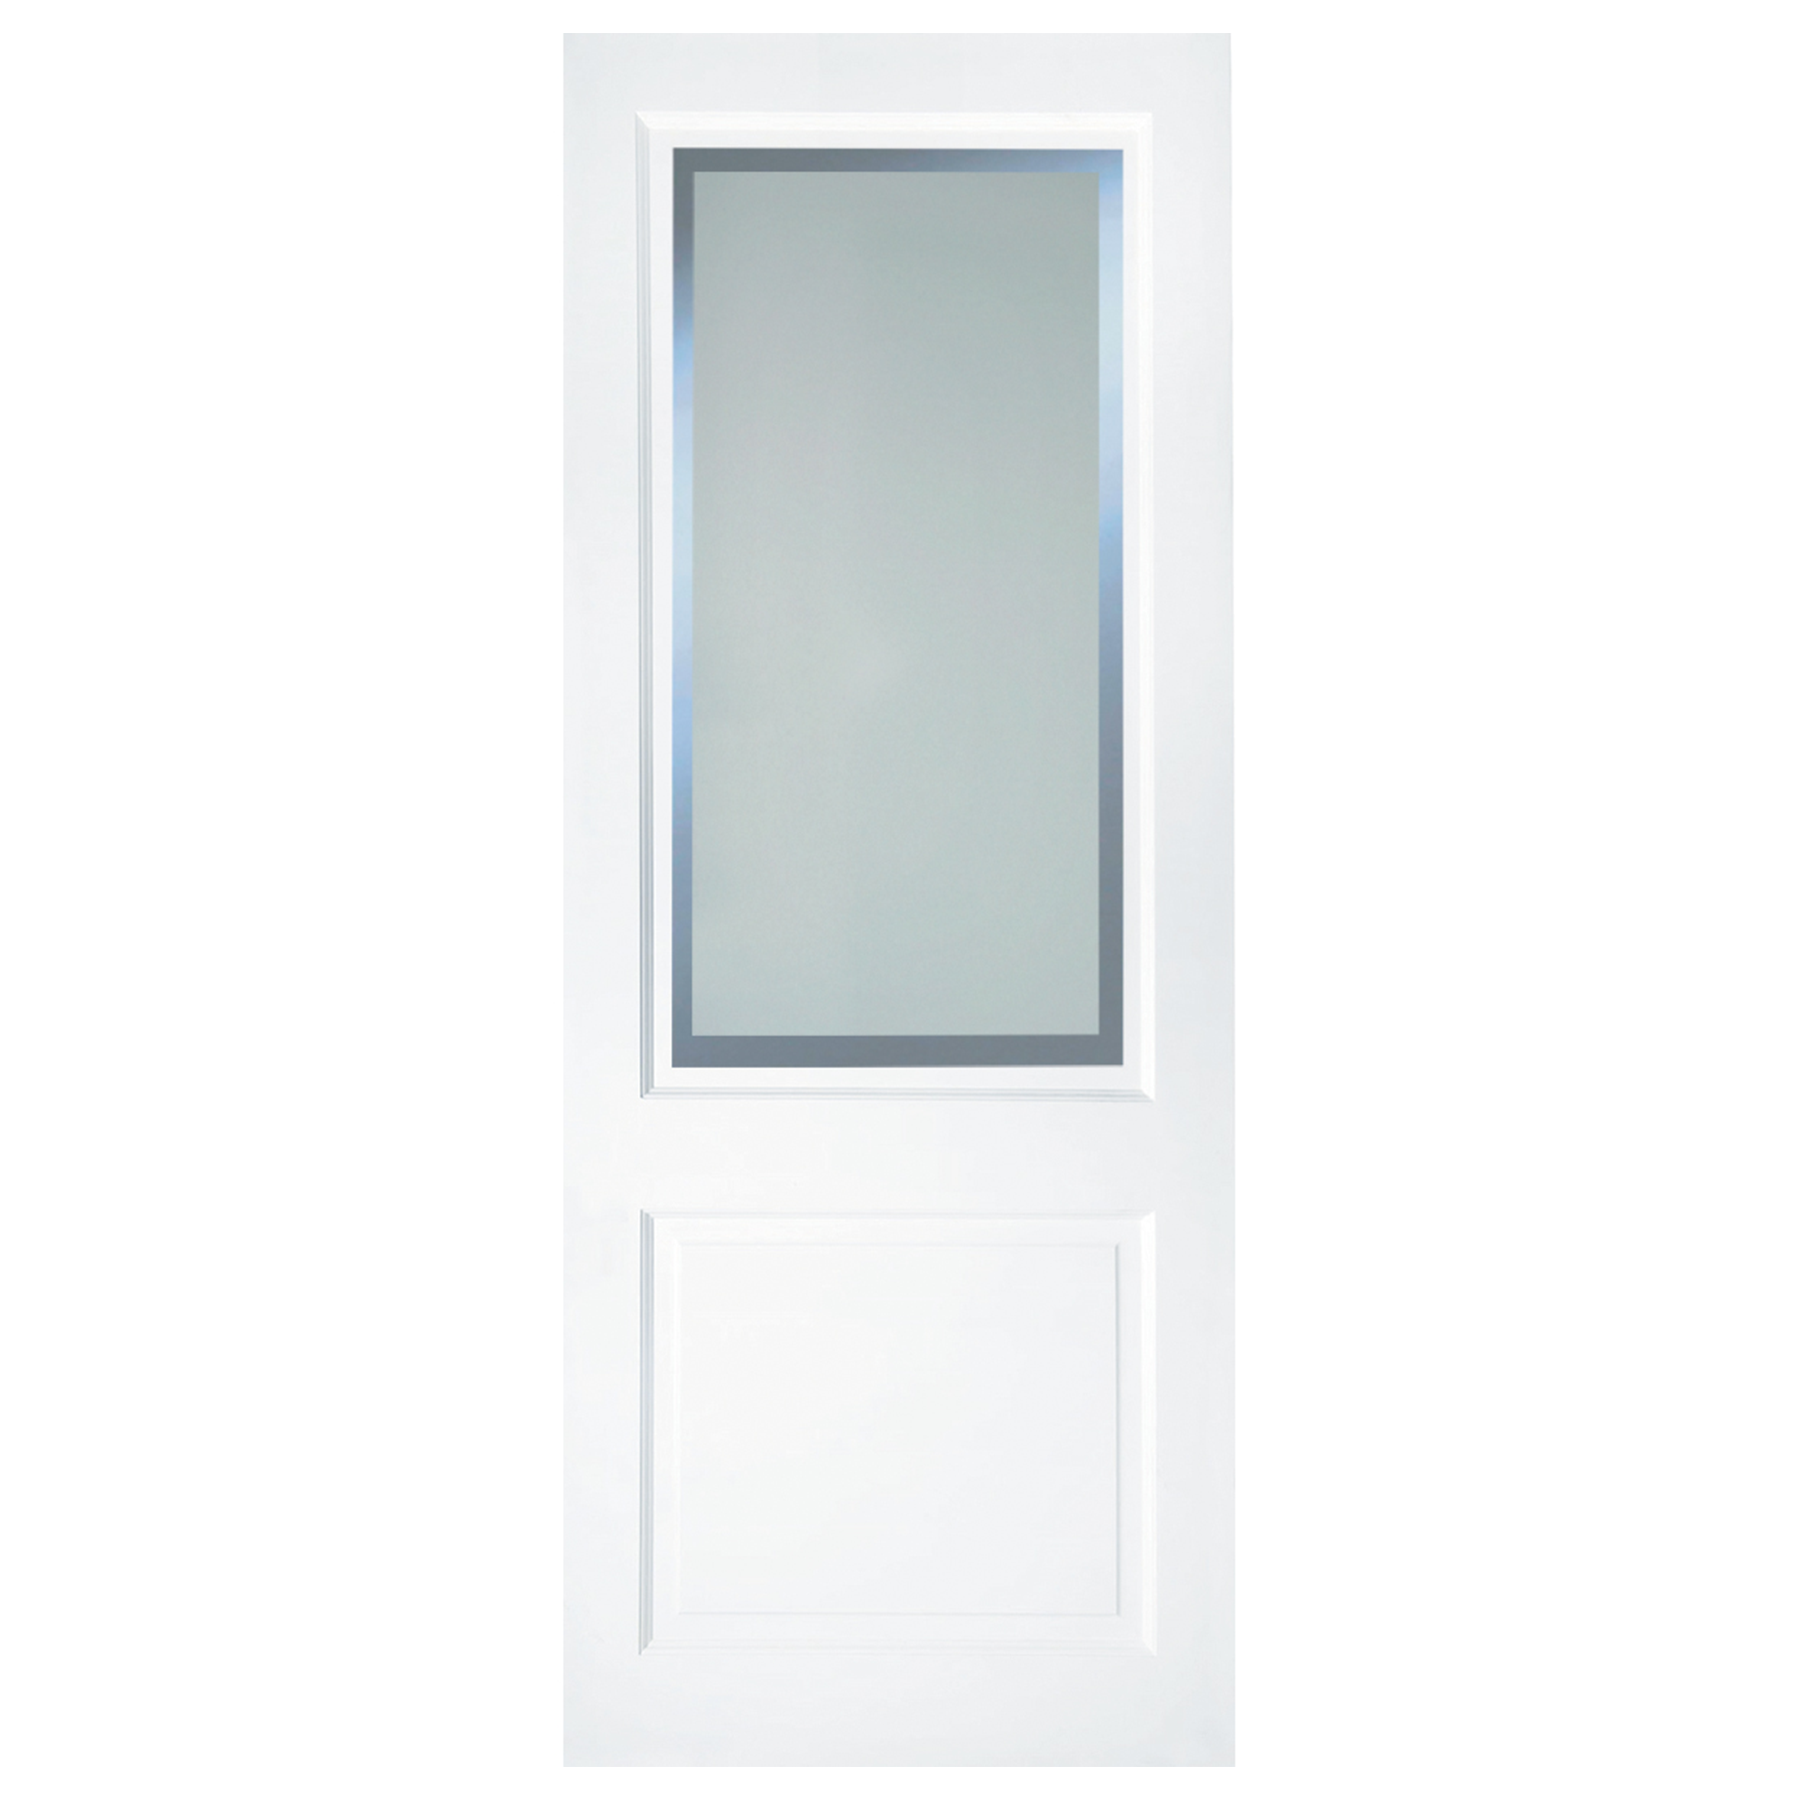 Auburn White Primed Door Etch Glazed - Clear Border 80X32